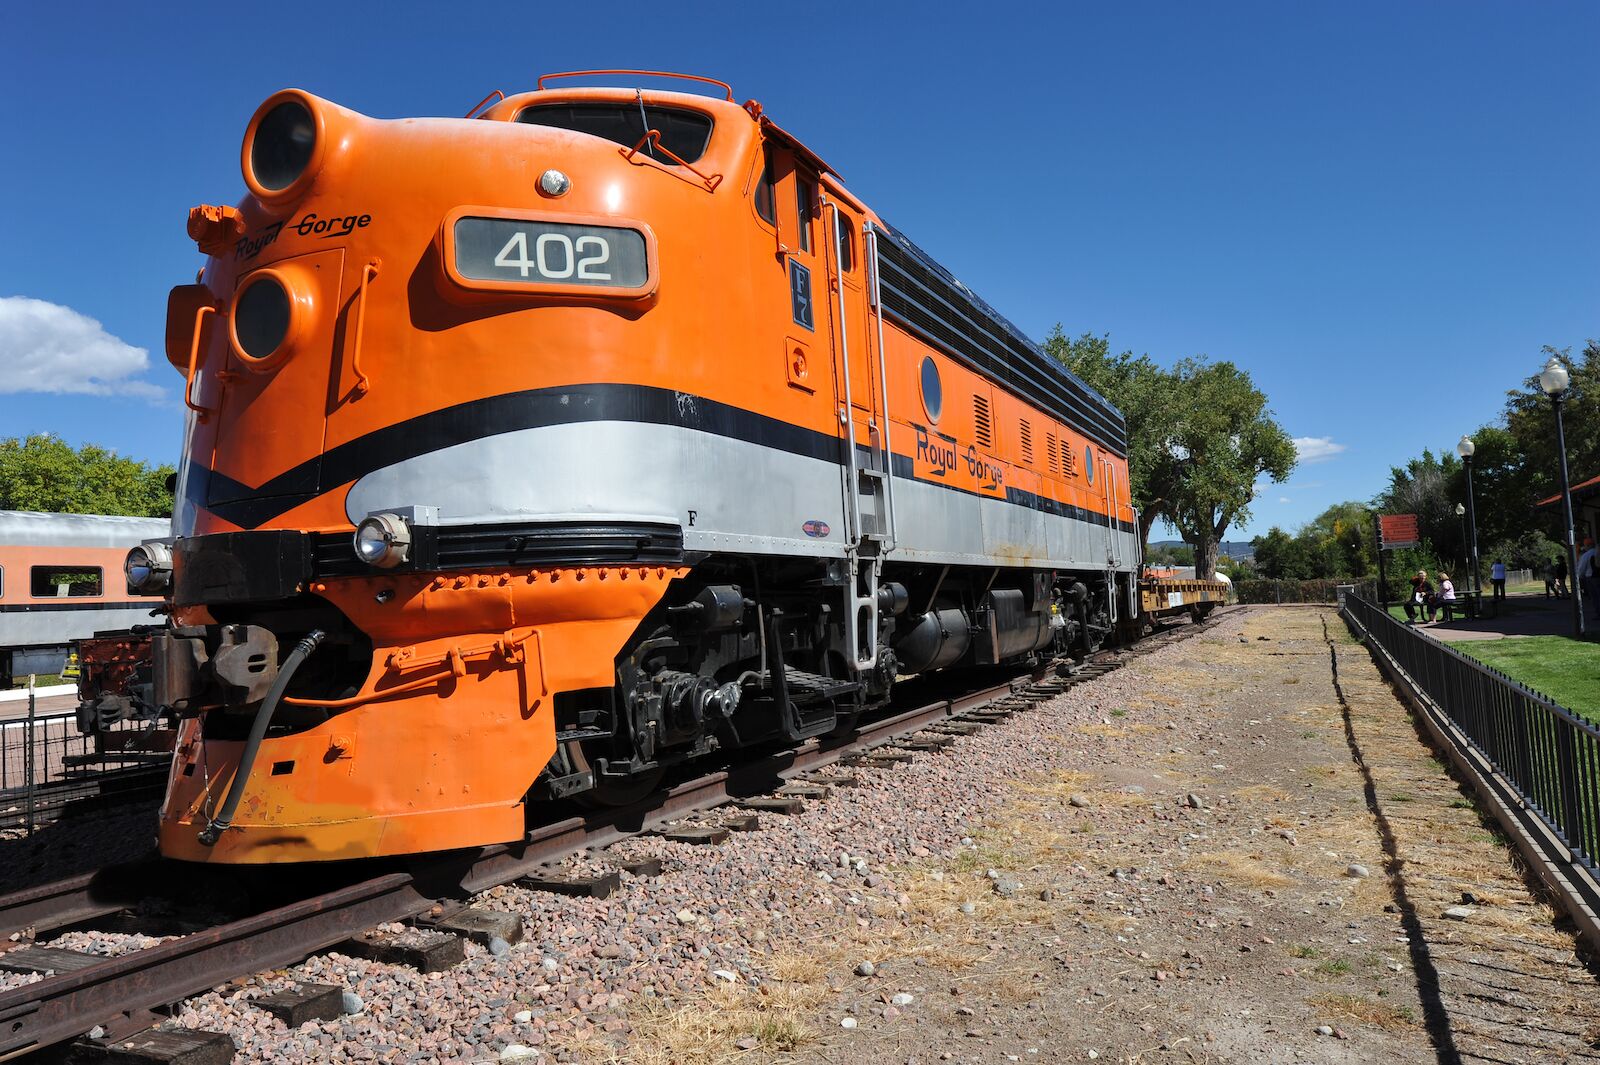 Royal Gorge Train orange locomotive